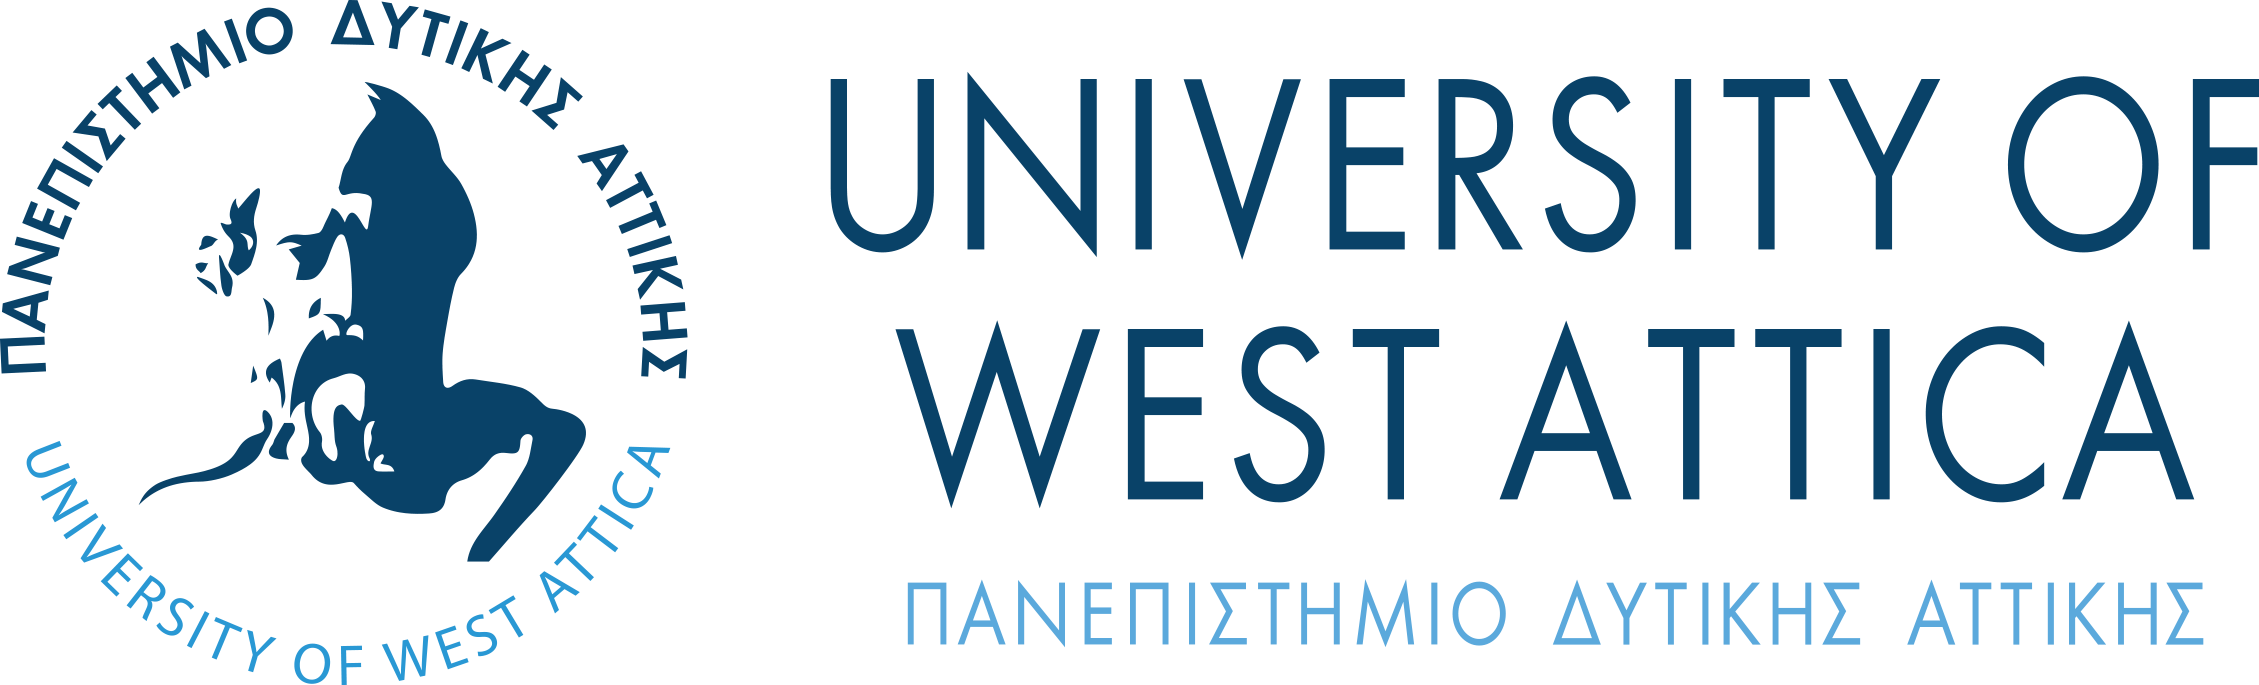 Logo west attica.png (142 KB)